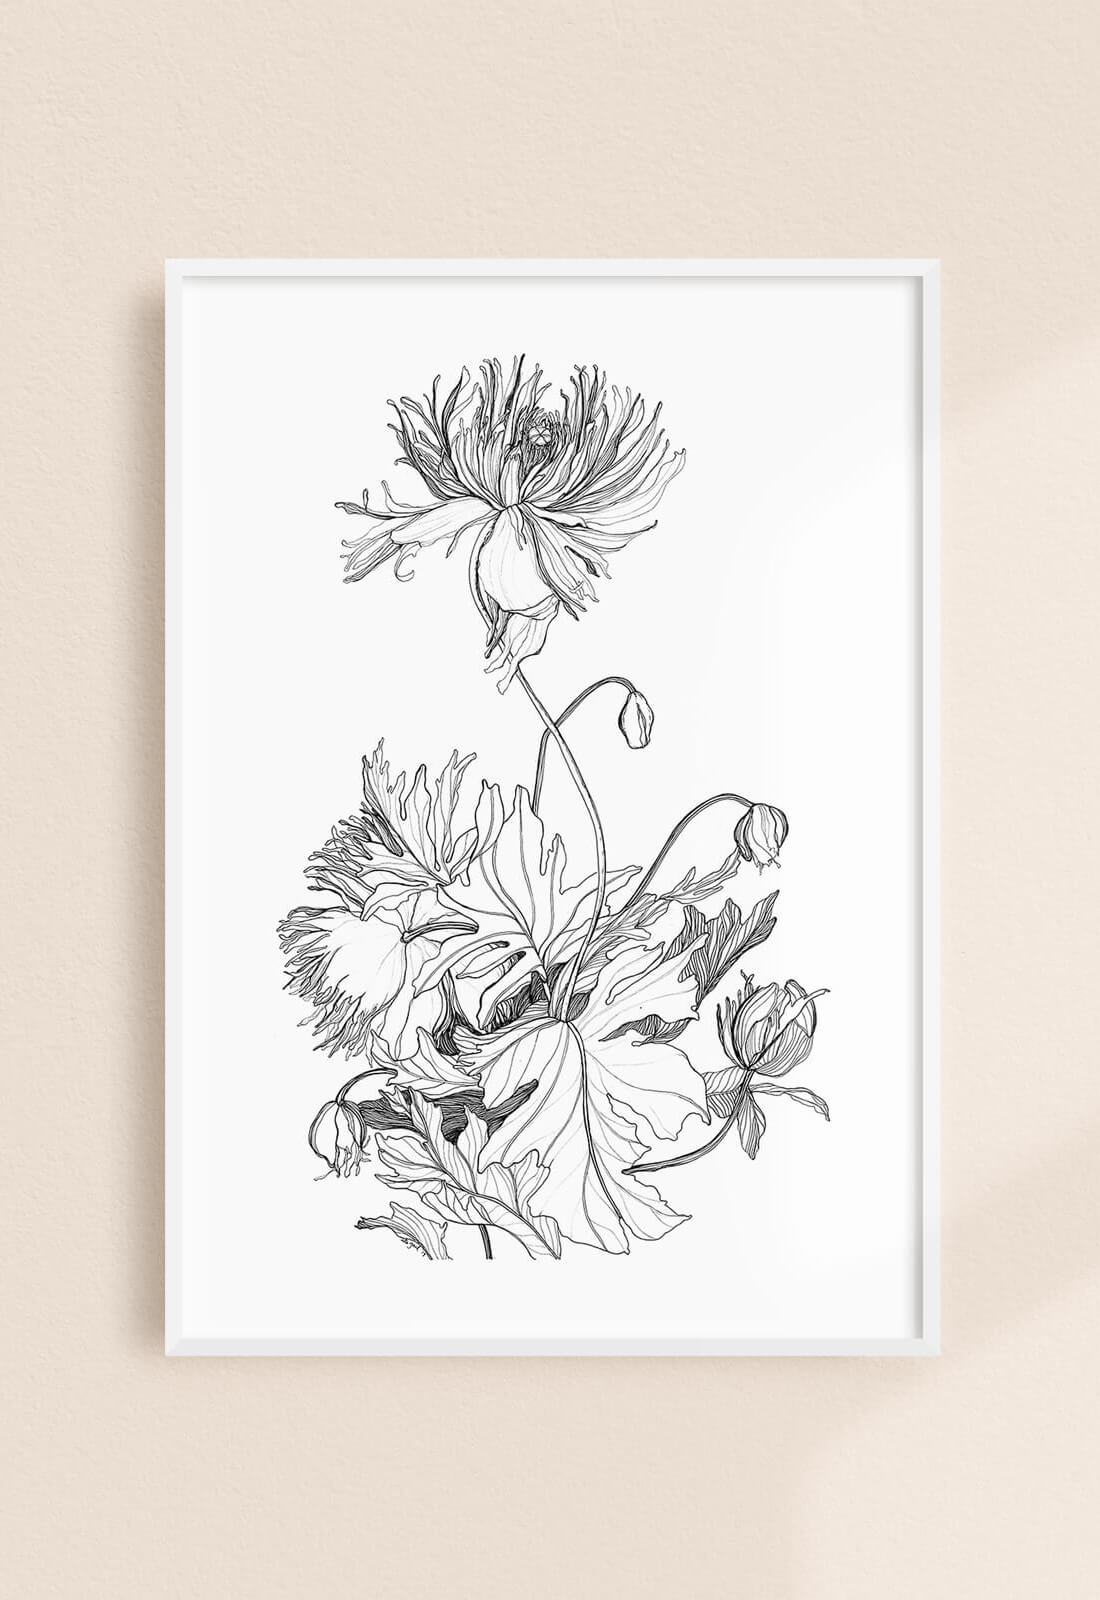 Hand Drawn Botanical Illustration Print - Japanese Poppies - 11x14